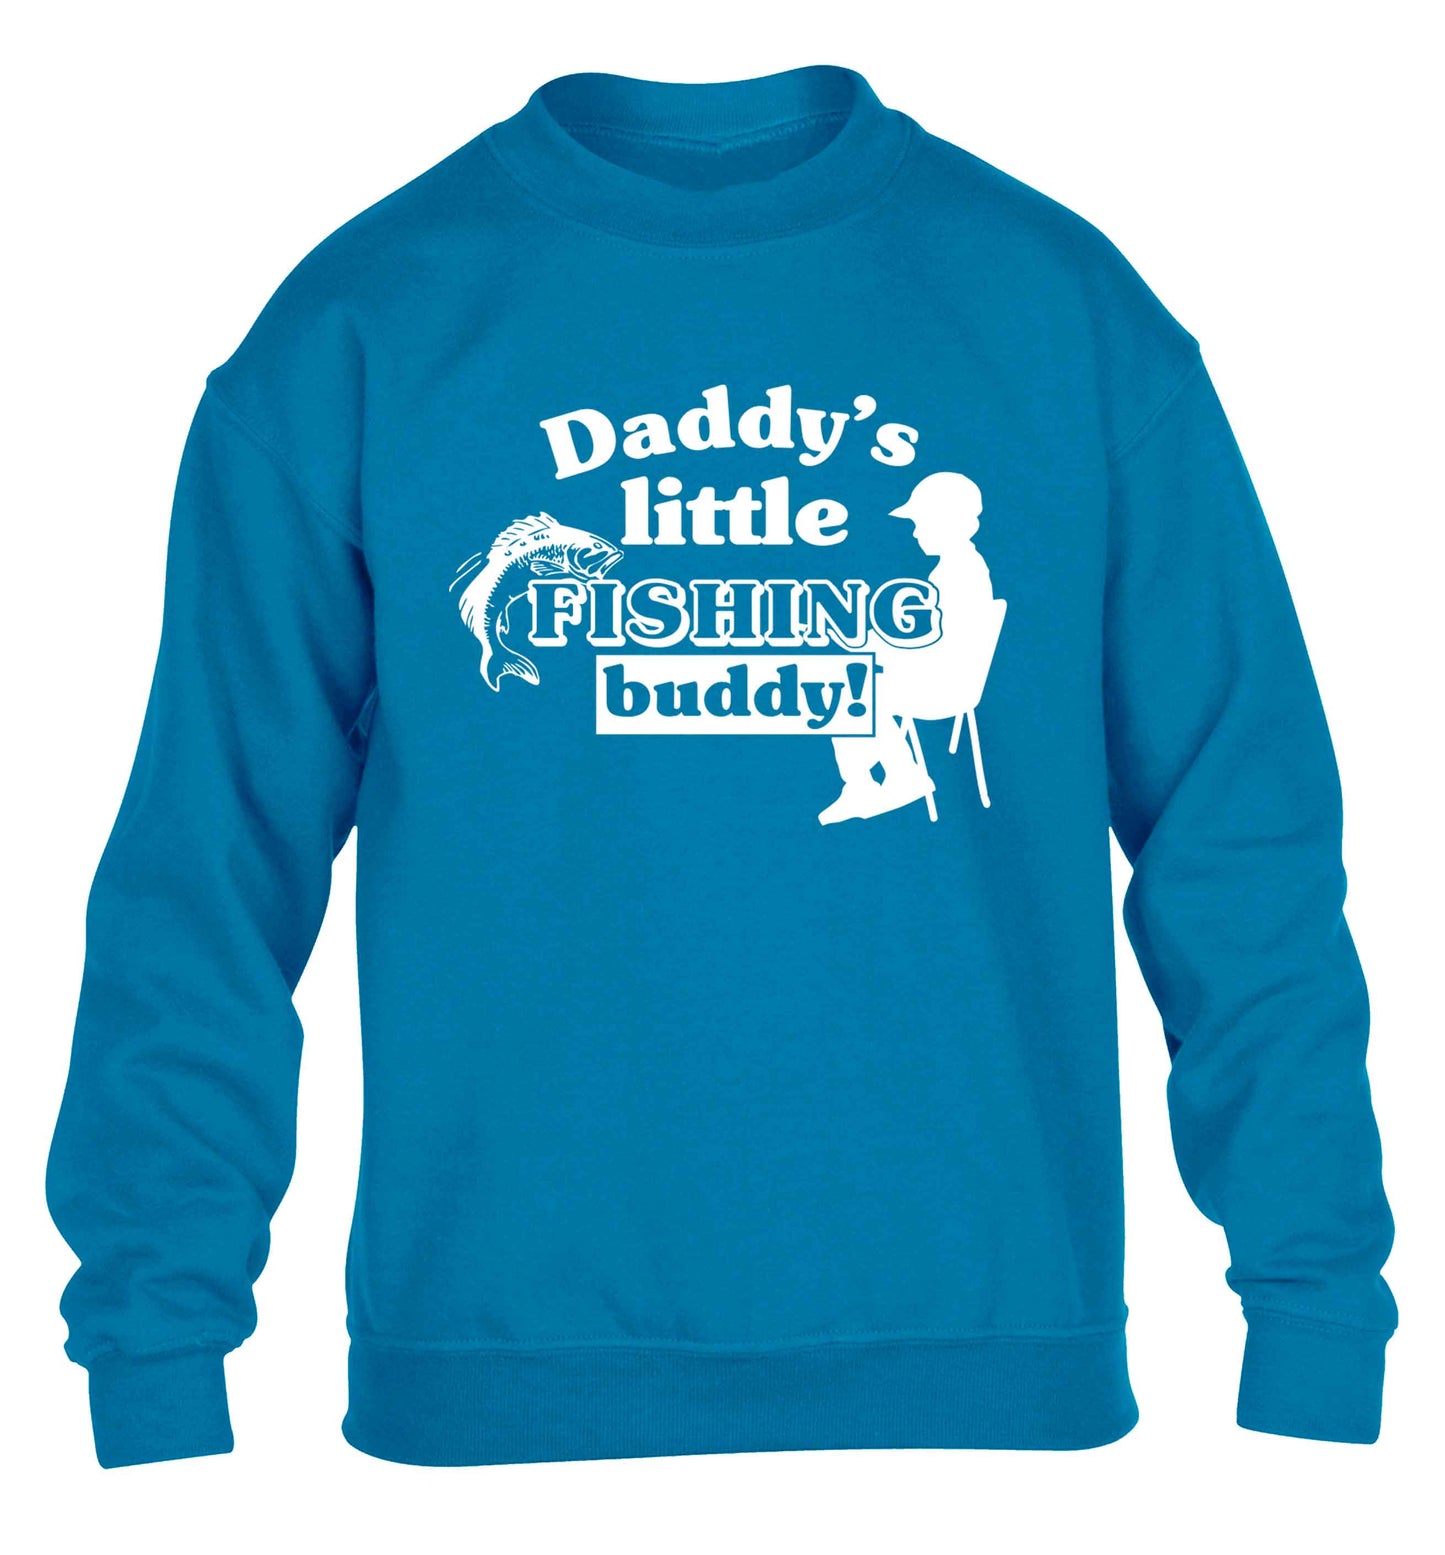 Daddy's little fishing buddy children's blue sweater 12-13 Years